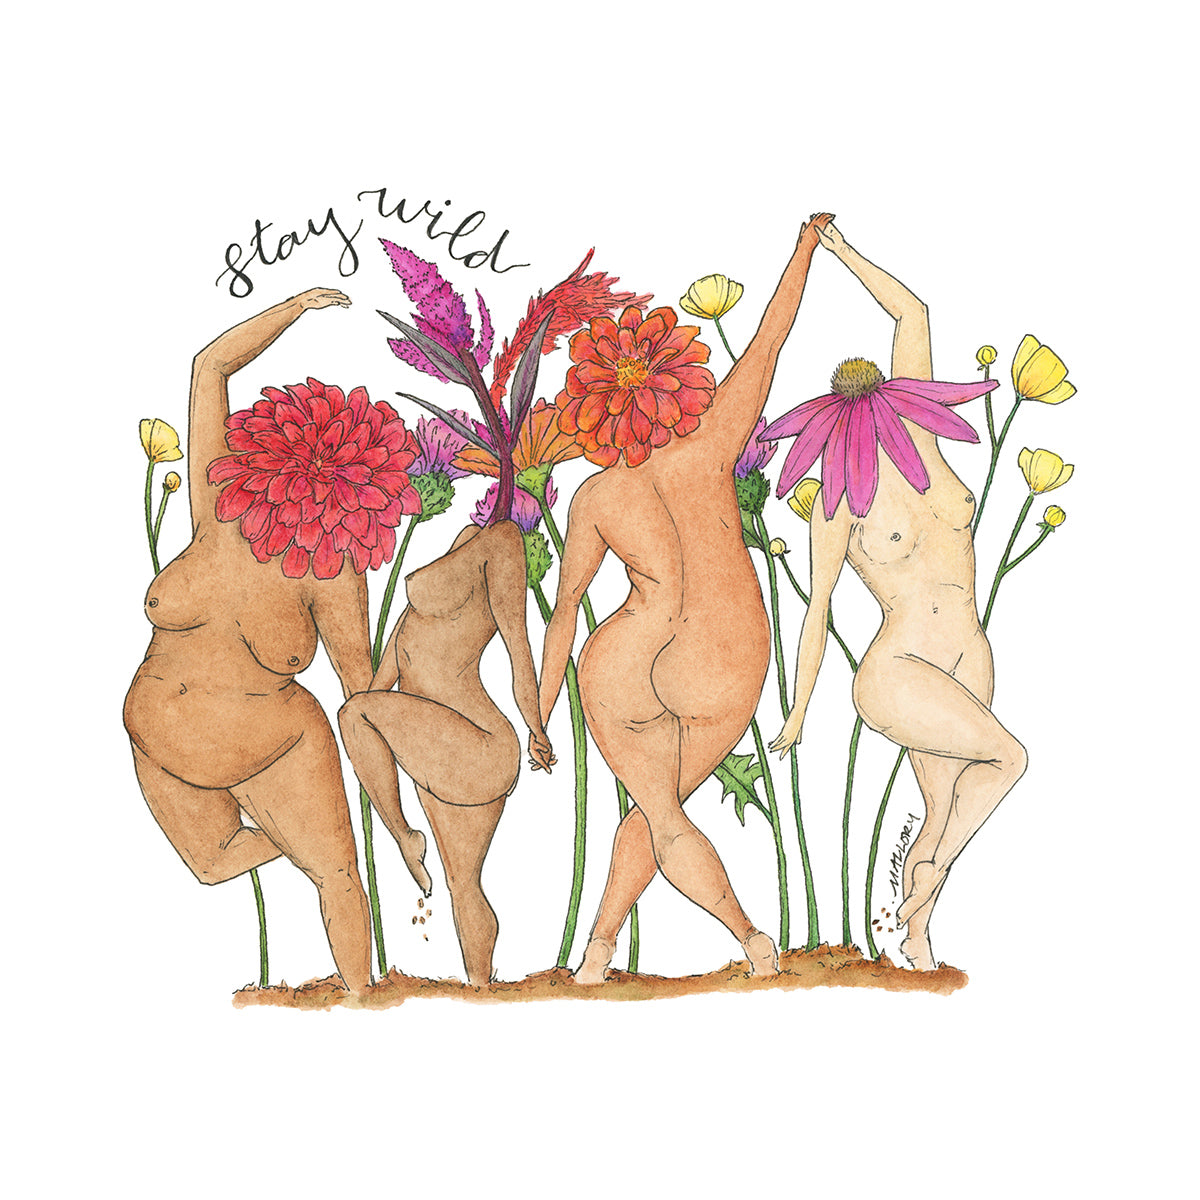 Stay Wild Wildflower Ladies 8x10" Print